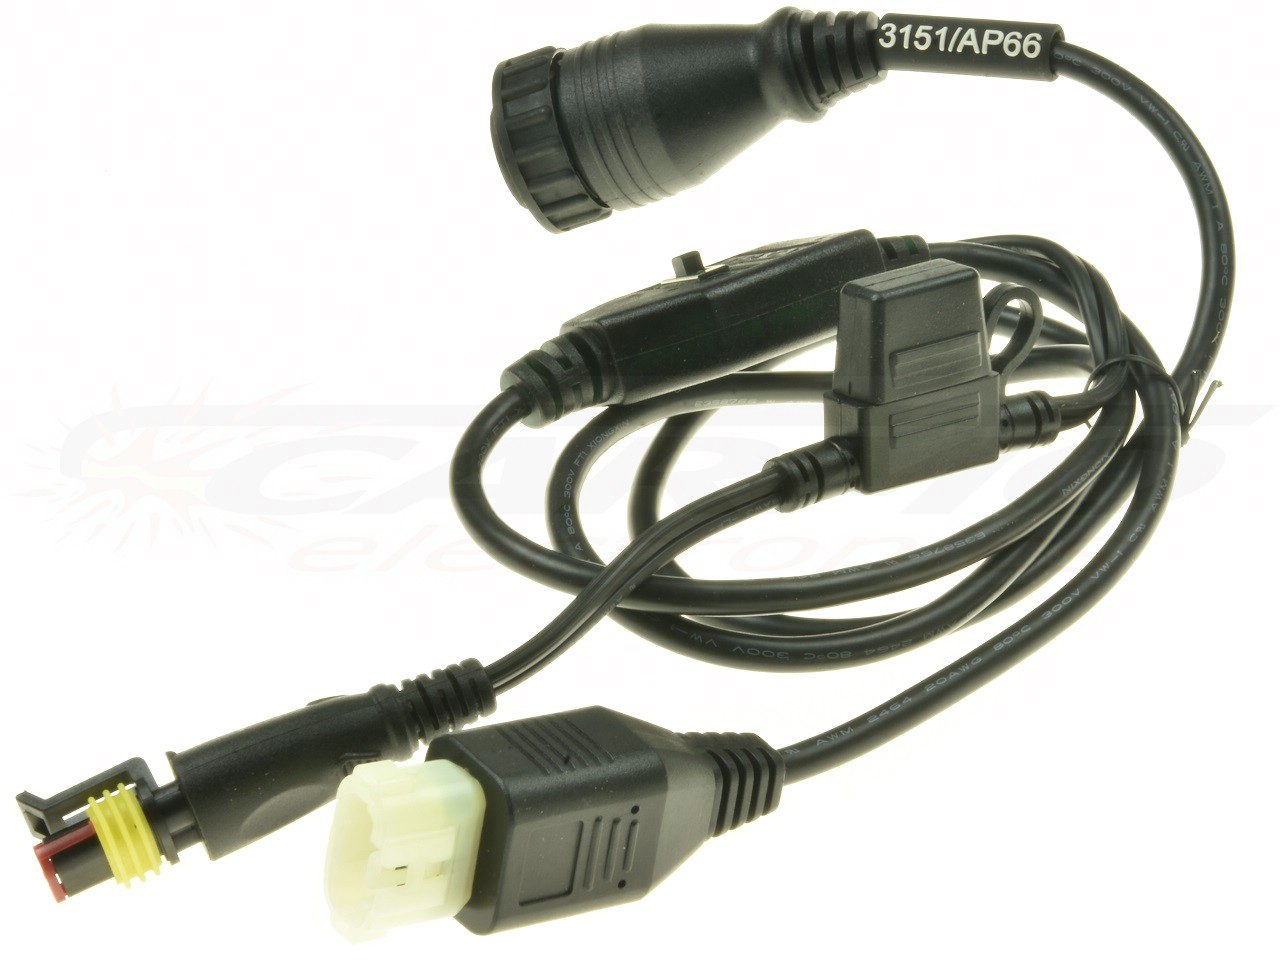 3151/AP66 Motorcycle Yamaha cross diagnostic and power cable TEXA-3913318 - Clique na Imagem para Fechar